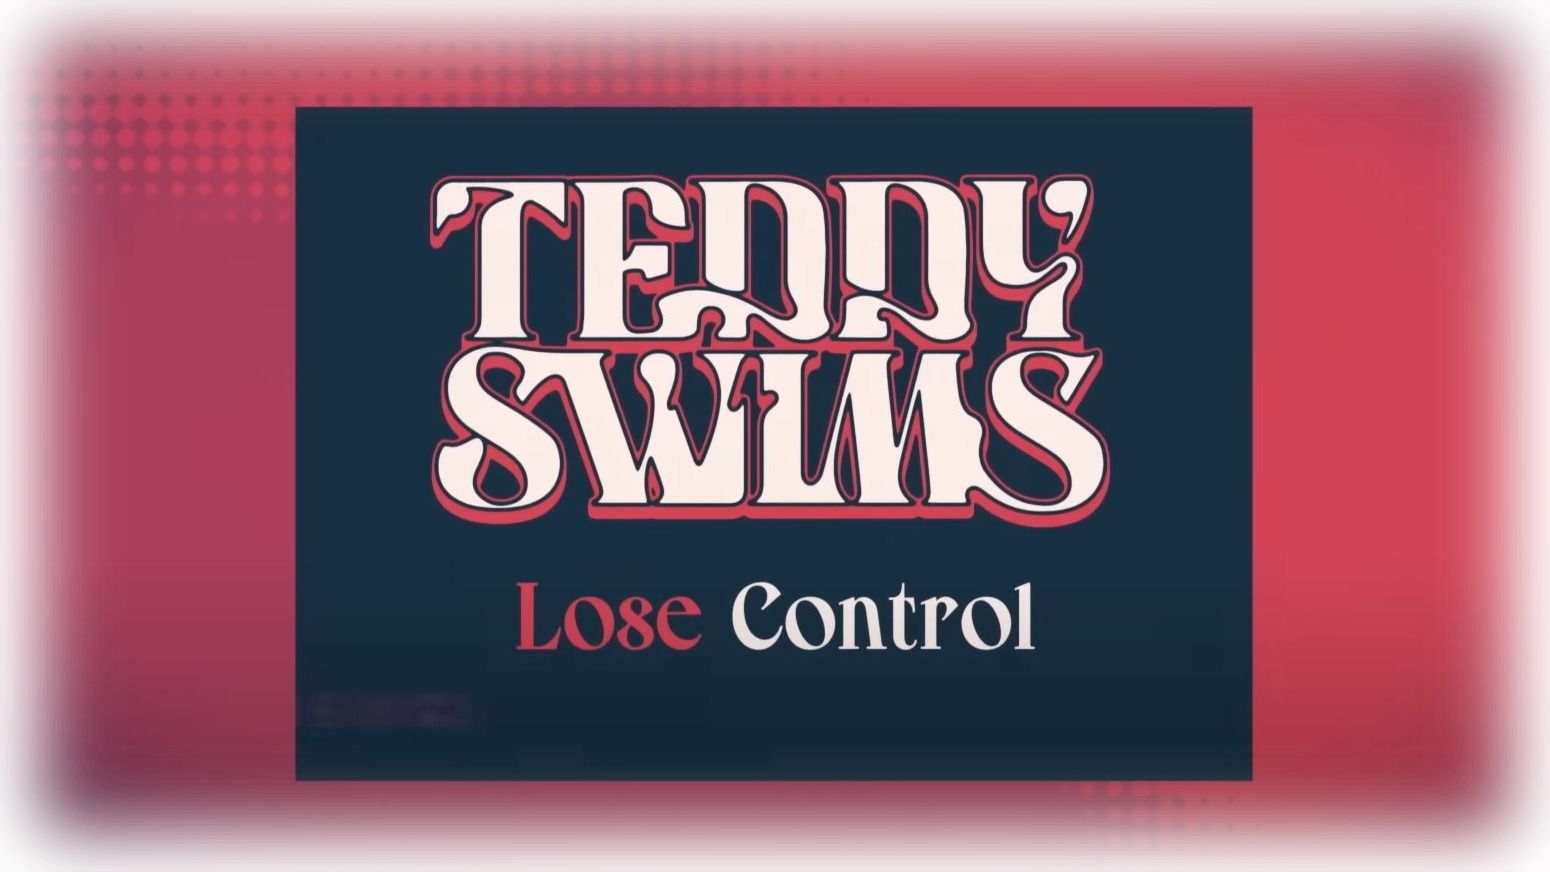 teddy-swims-lose-control-perevod-teksta-na-russkij-yazyk